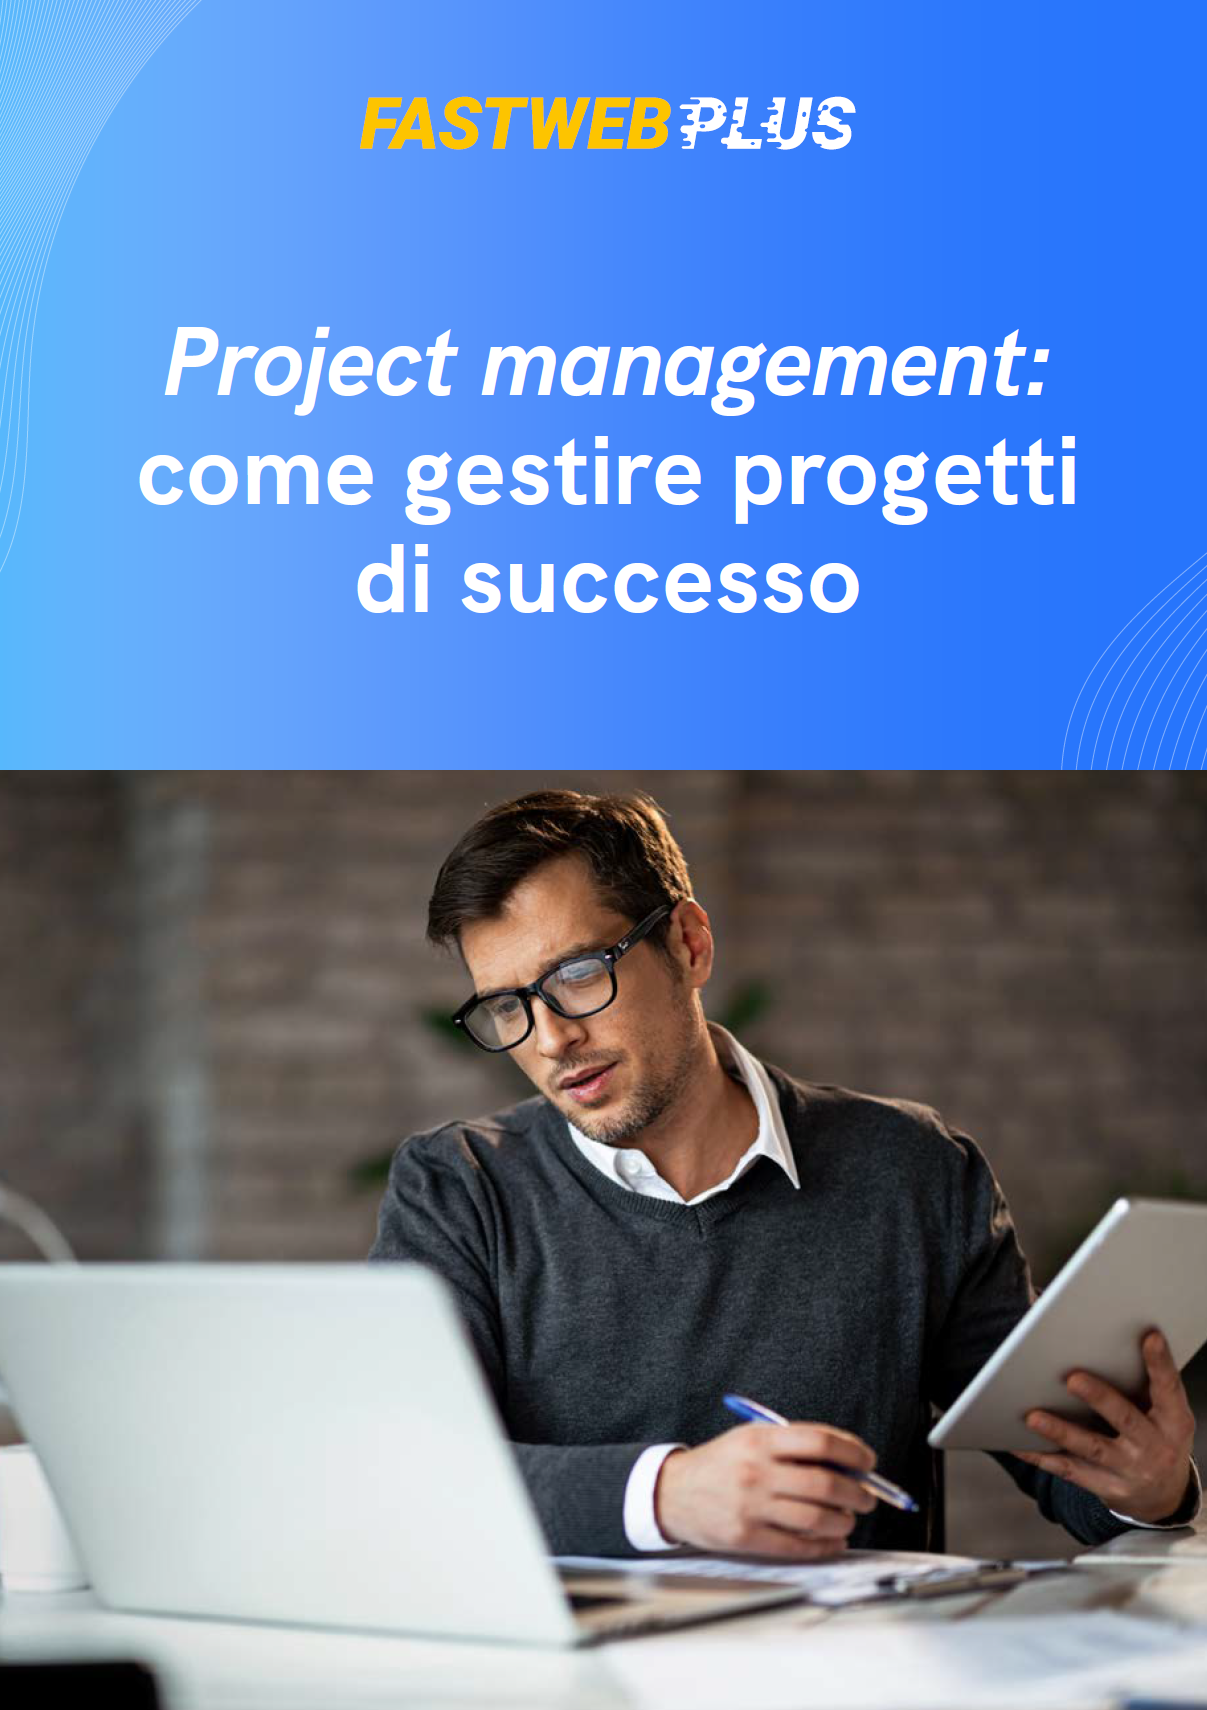 Copertina ebook sul Project Management